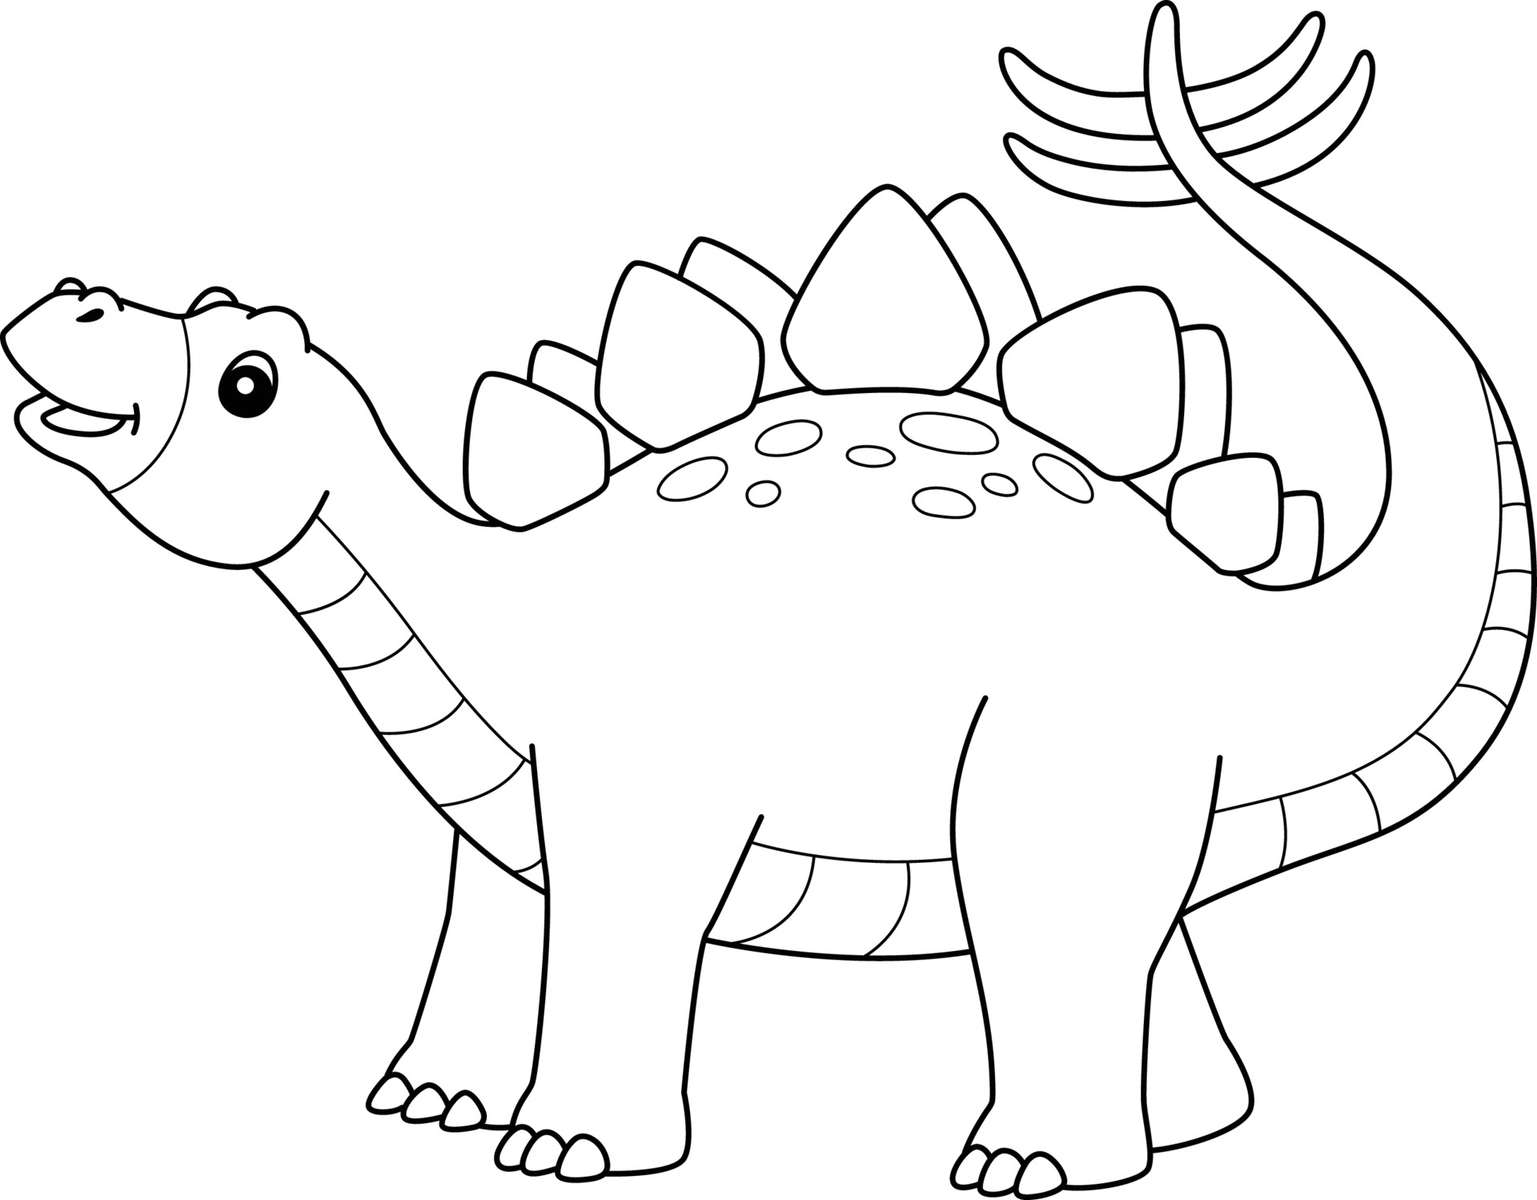 Jigsaw Stegosaurus puzzle online